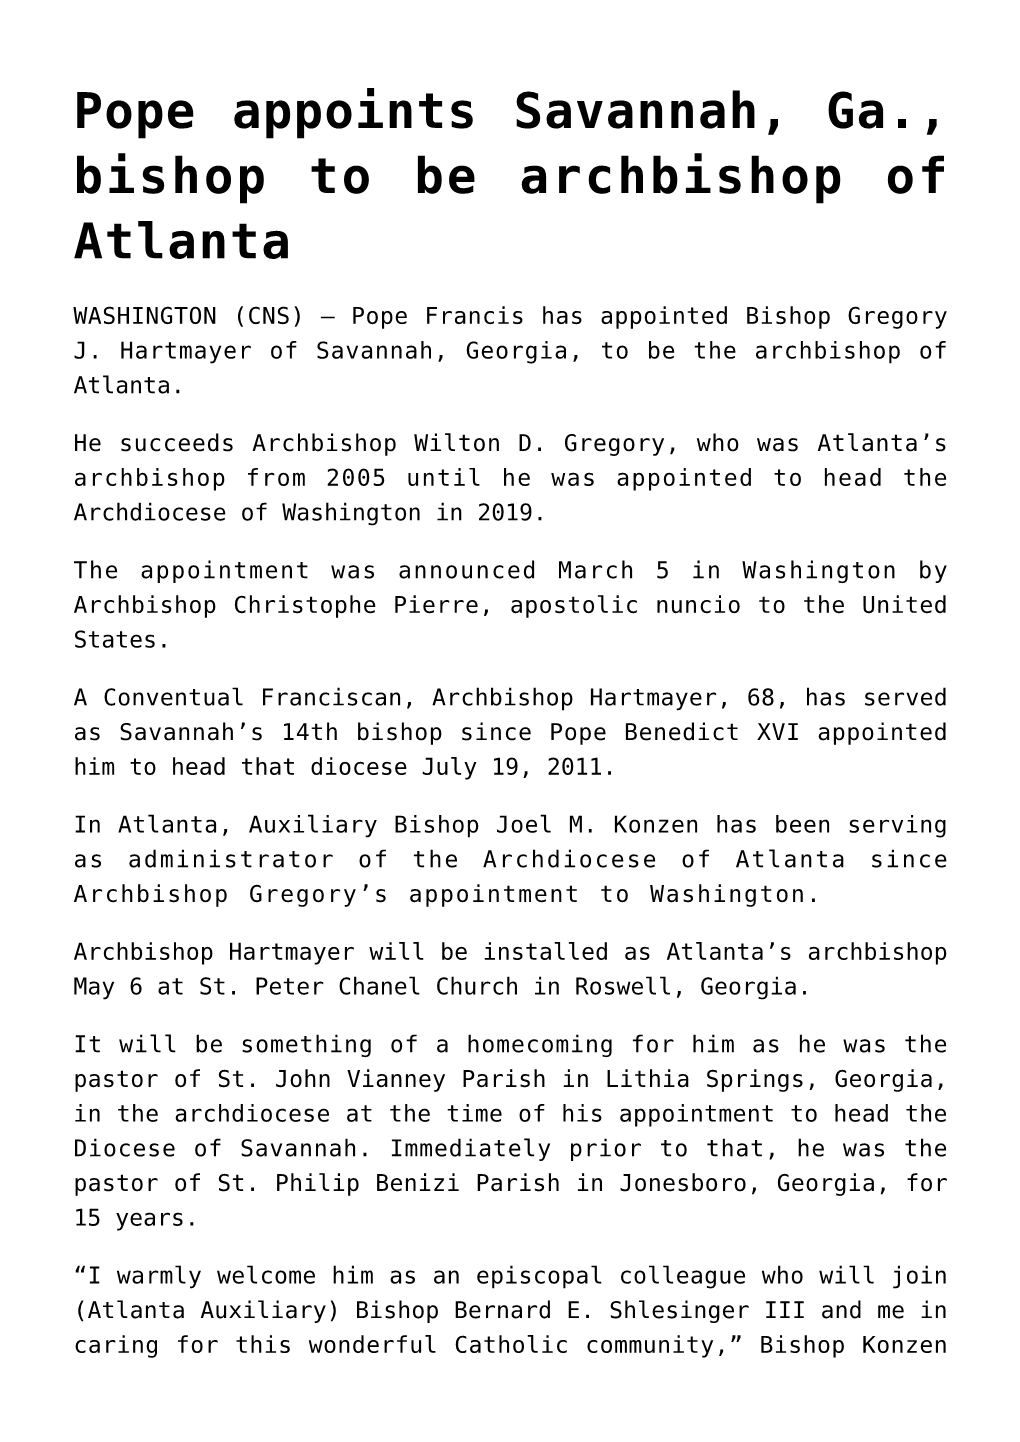 Pope Appoints Savannah, Ga., Bishop to Be Archbishop of Atlanta